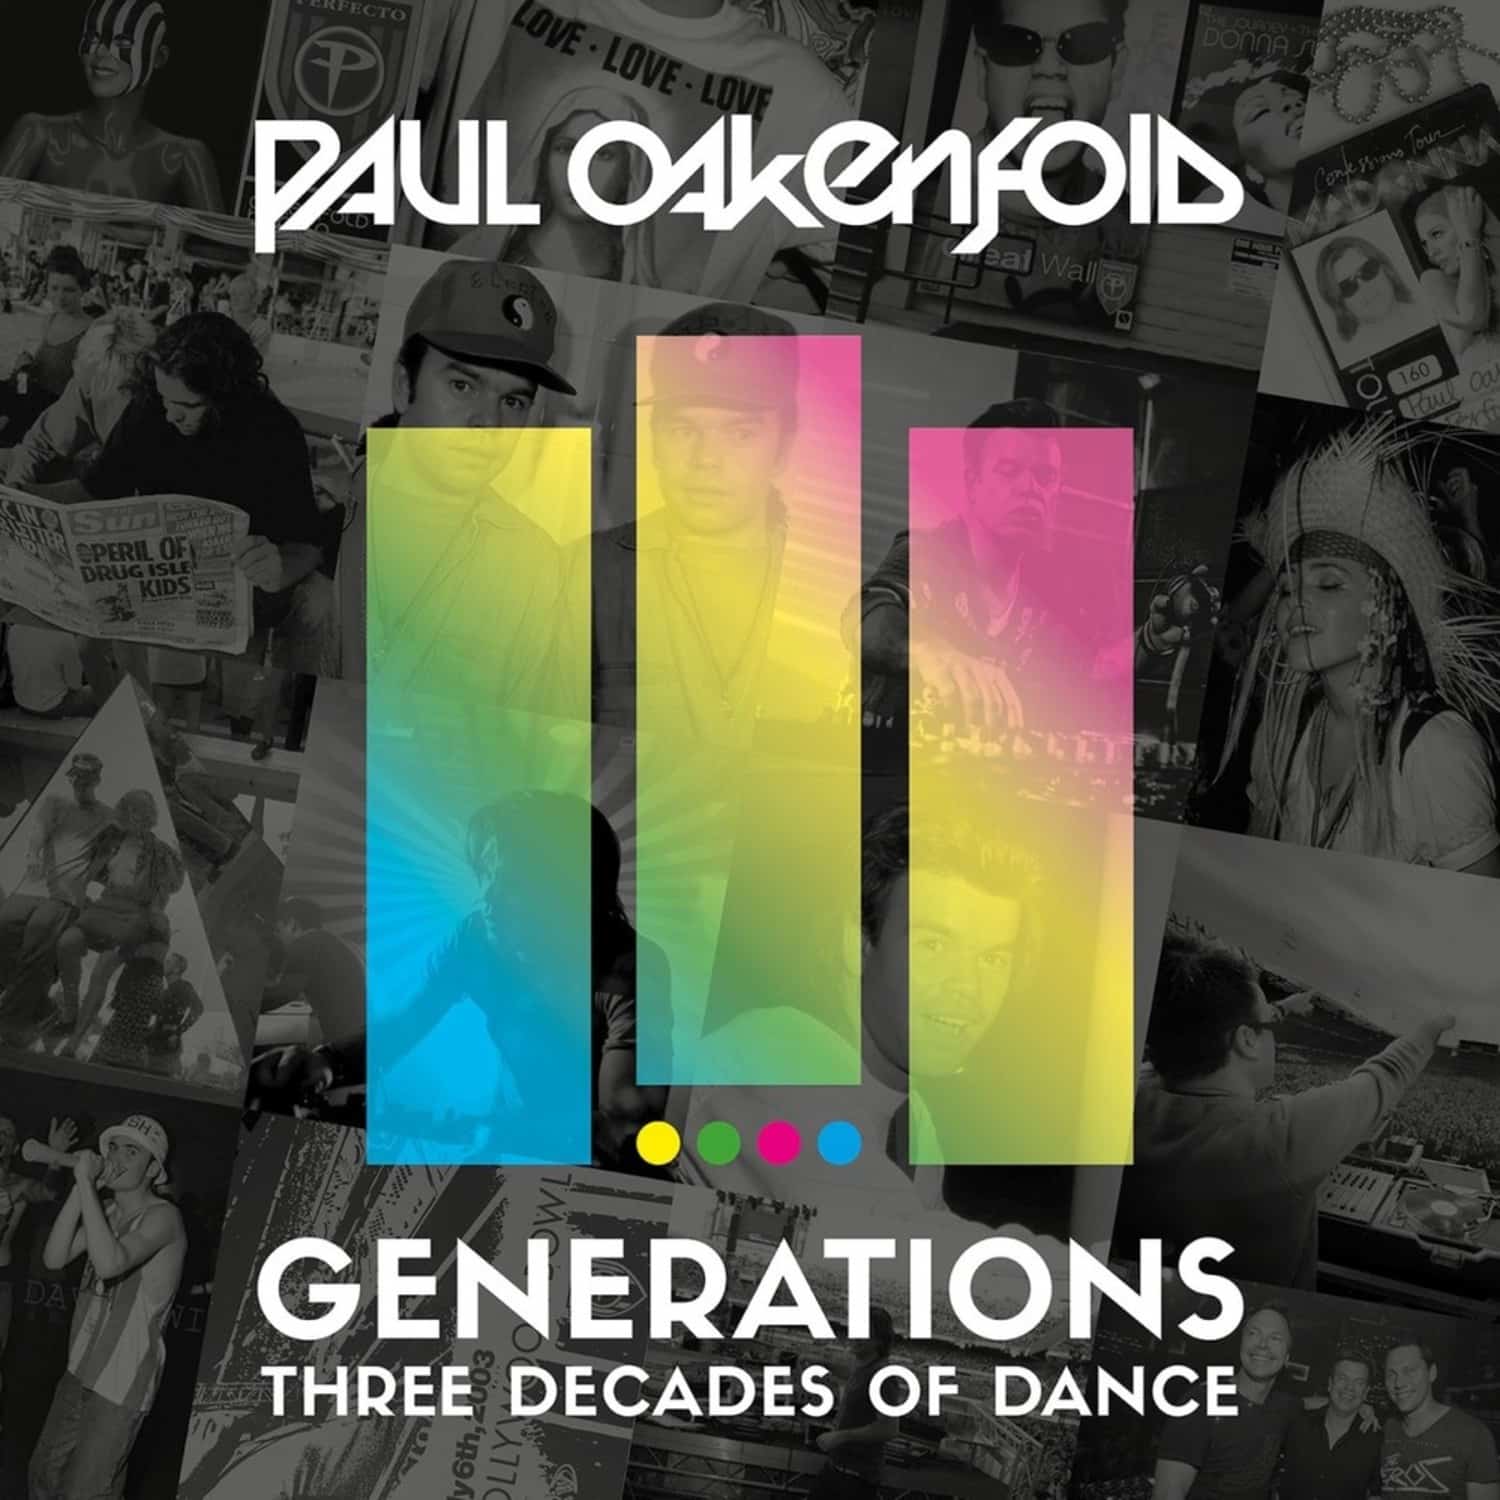 Paul oakenfold southern sun. Decade_Dance обложка. Эйсид Хаус компакт диски. 30 Years： three decades of dance3cd Box обложка. Timo Maas Ubik.